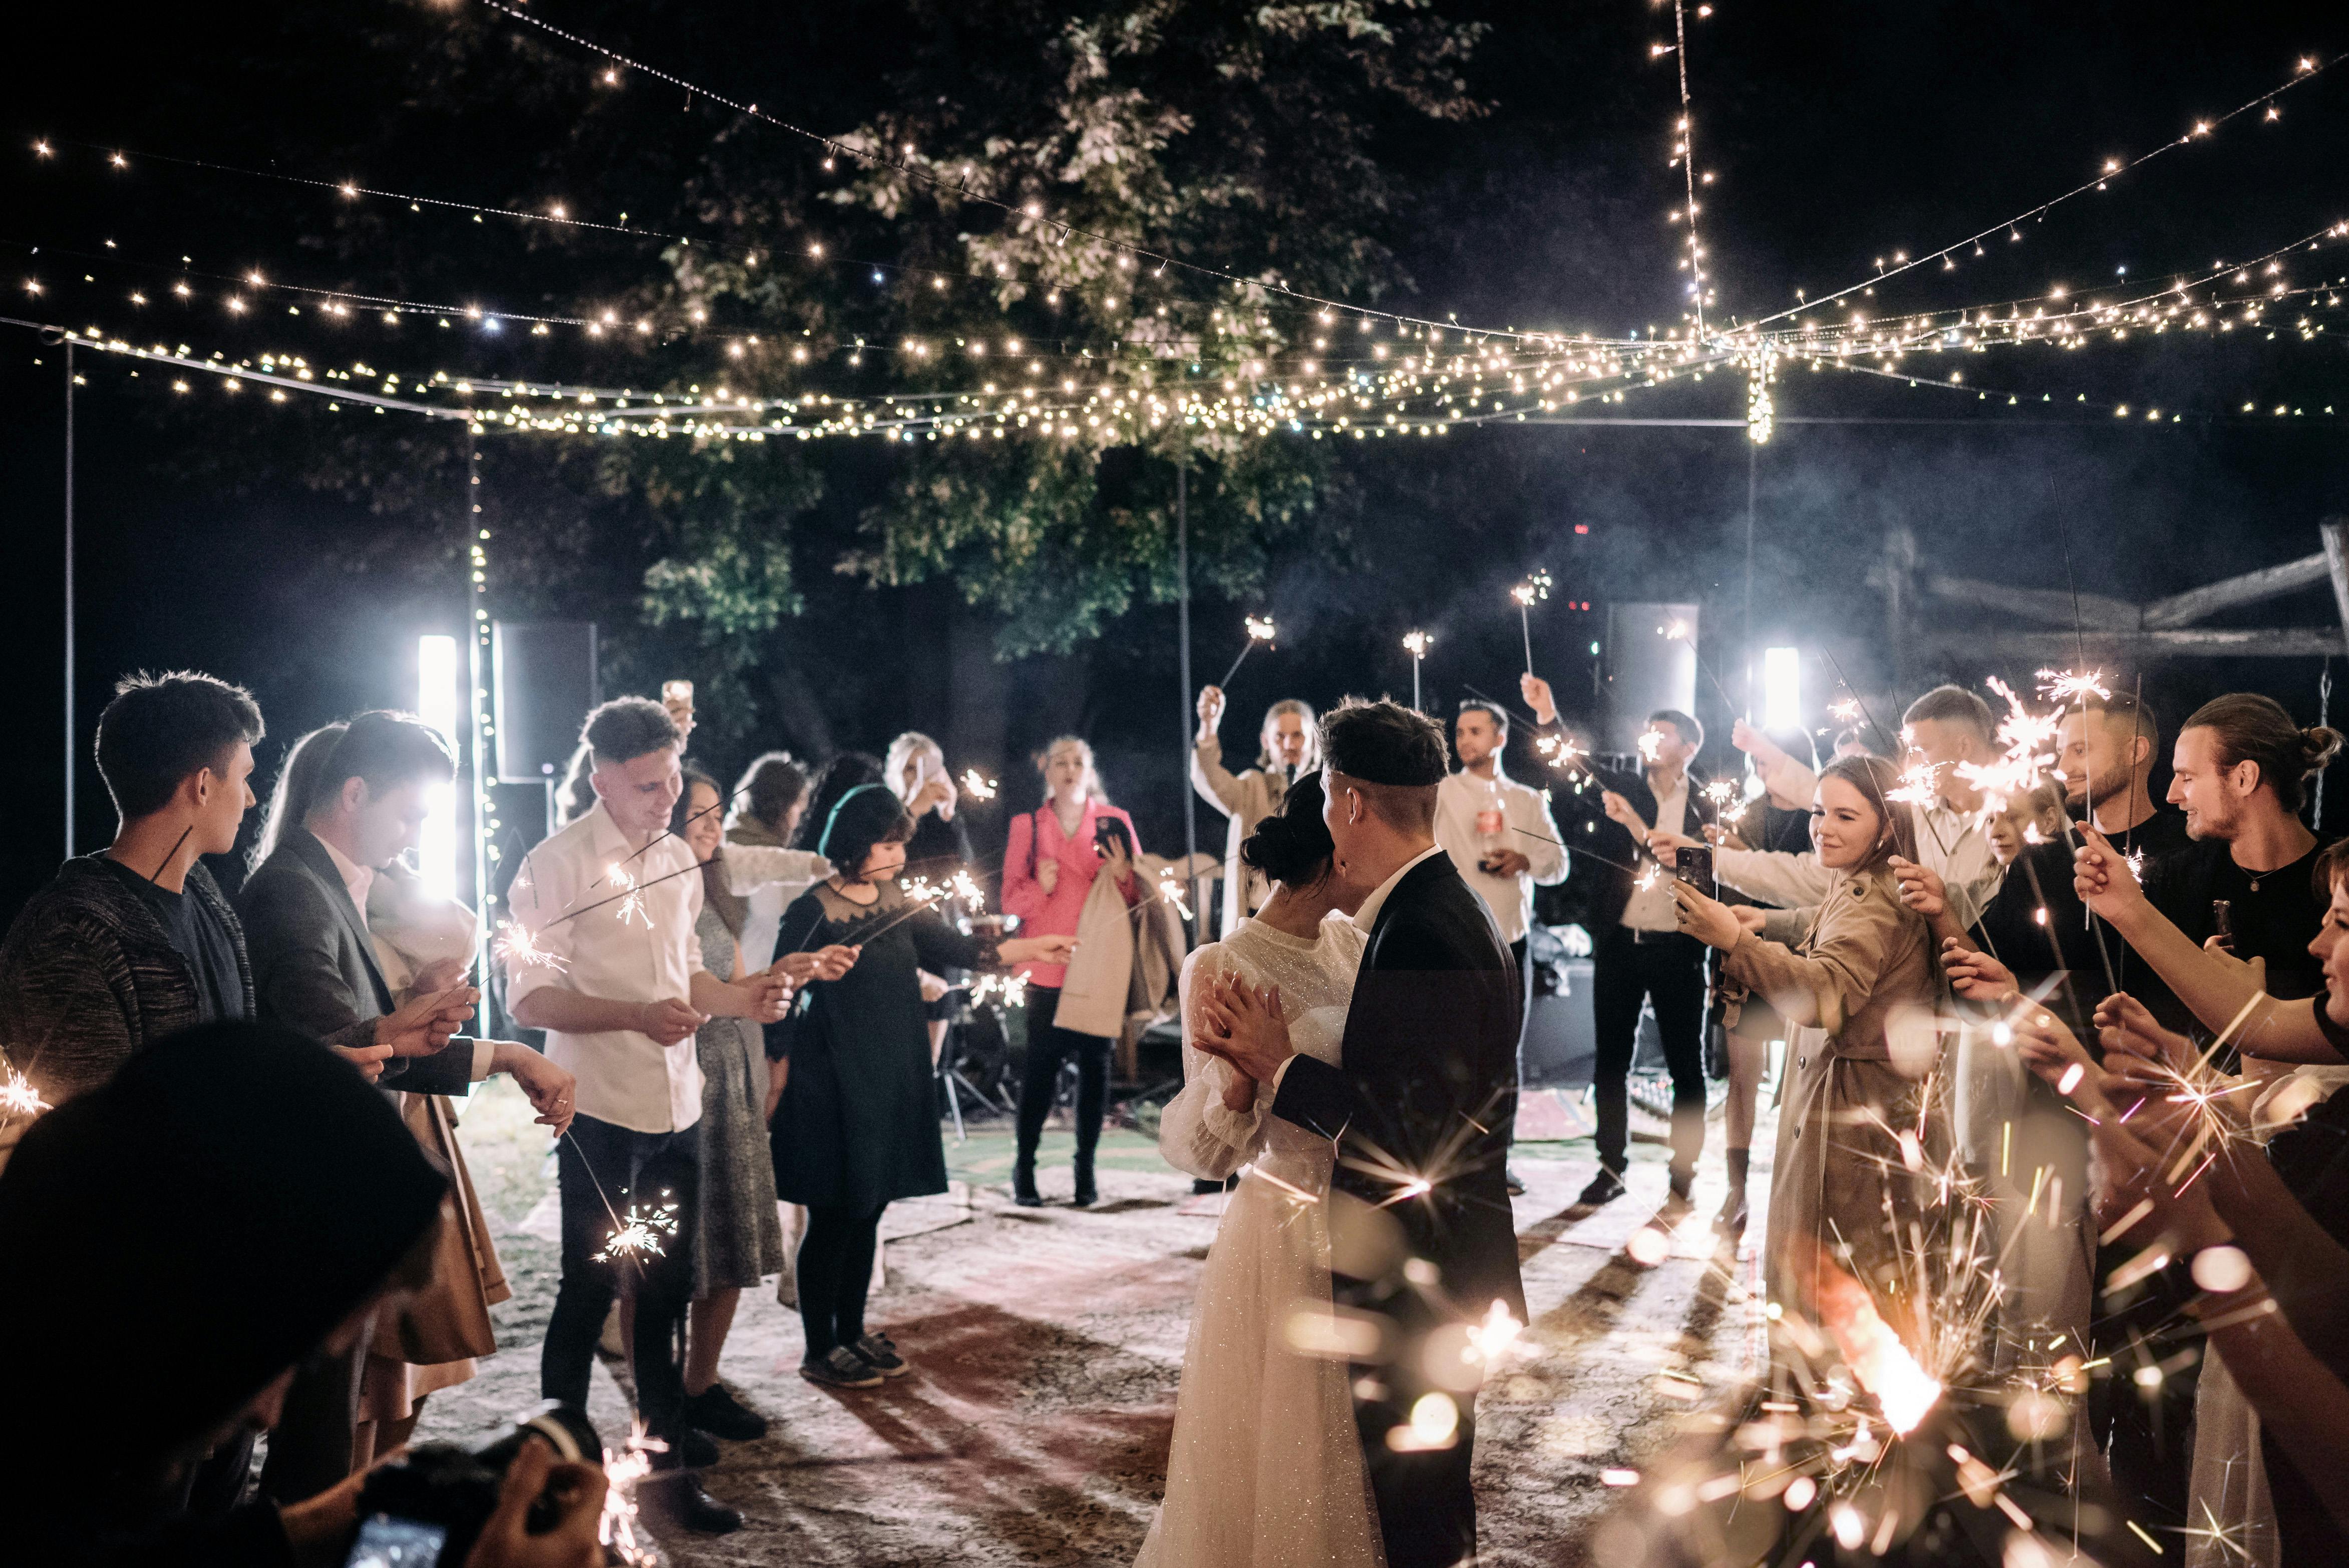 Wedding party | Source: Pexels